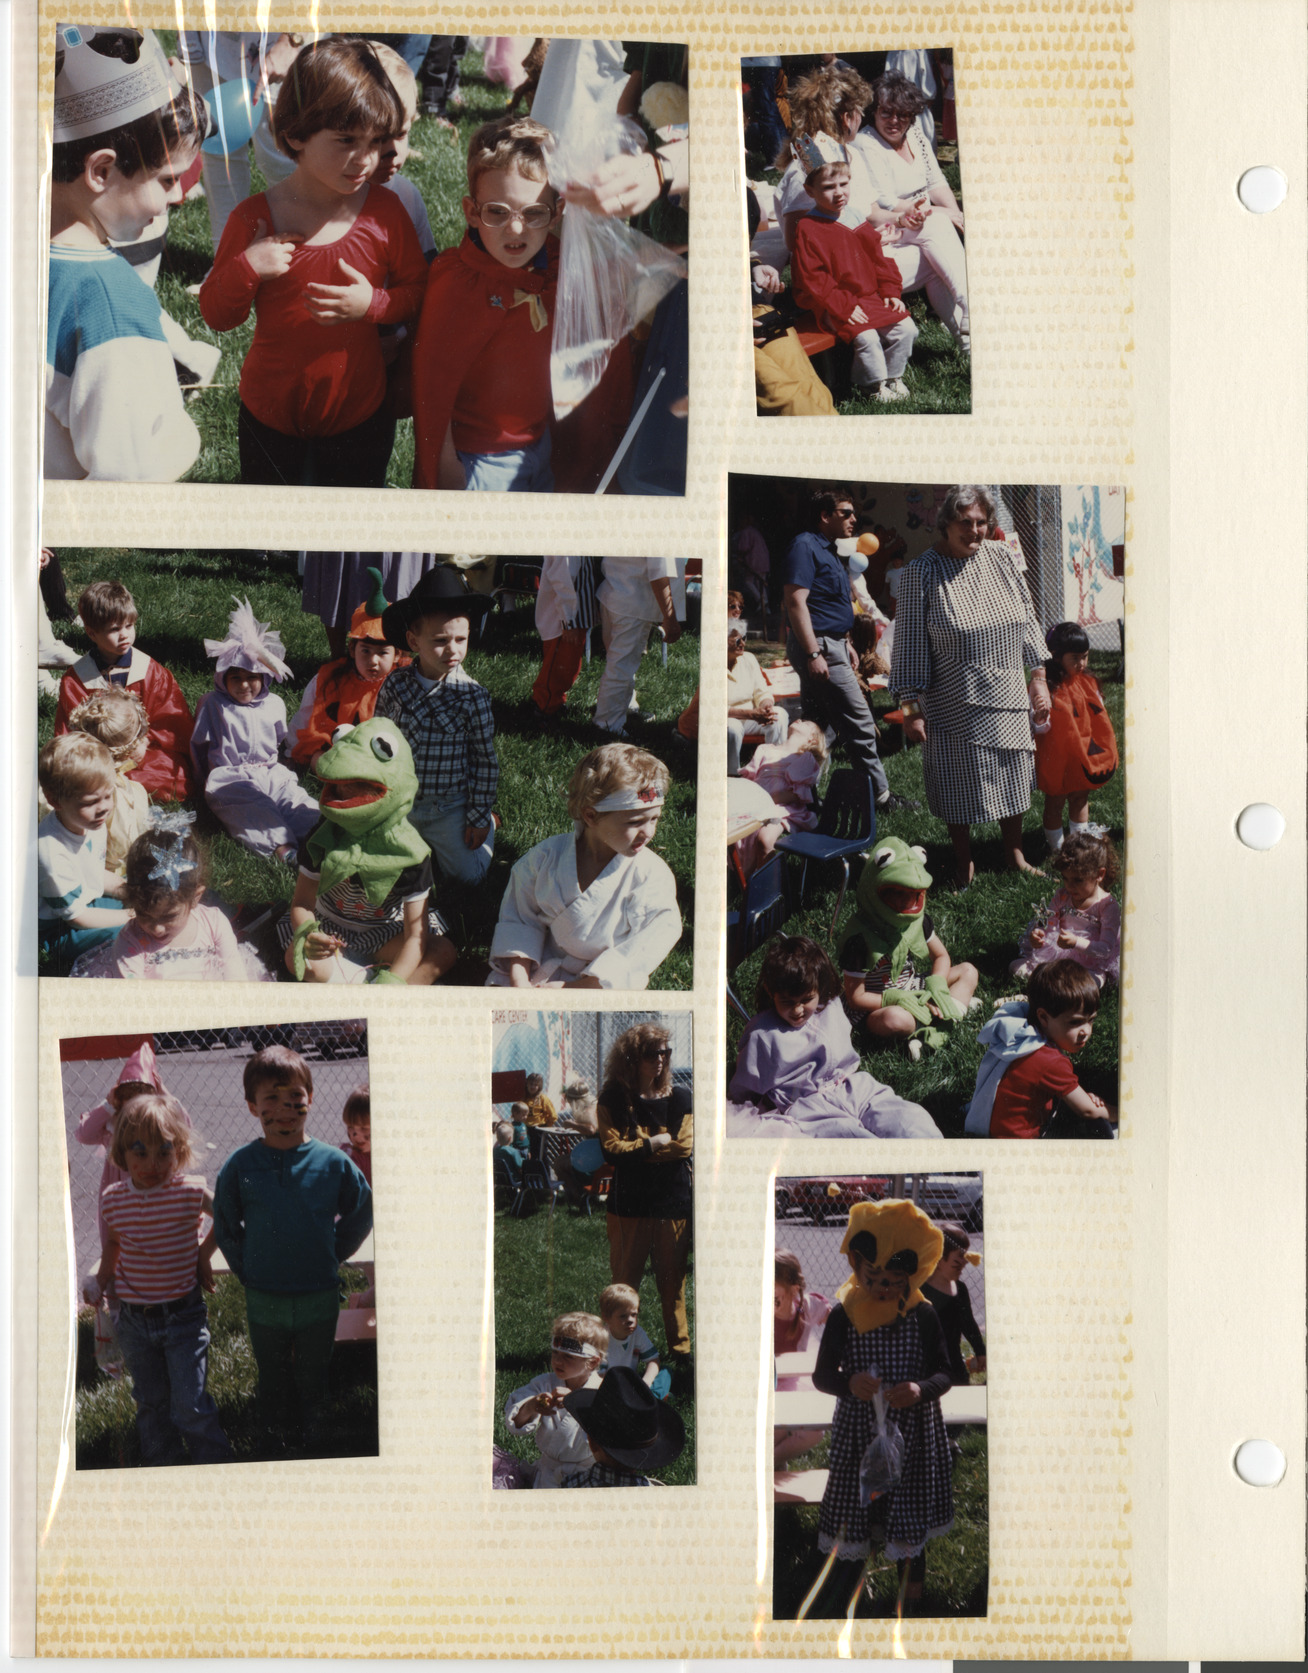 Temple Beth Sholom Preschool photo album, page 30